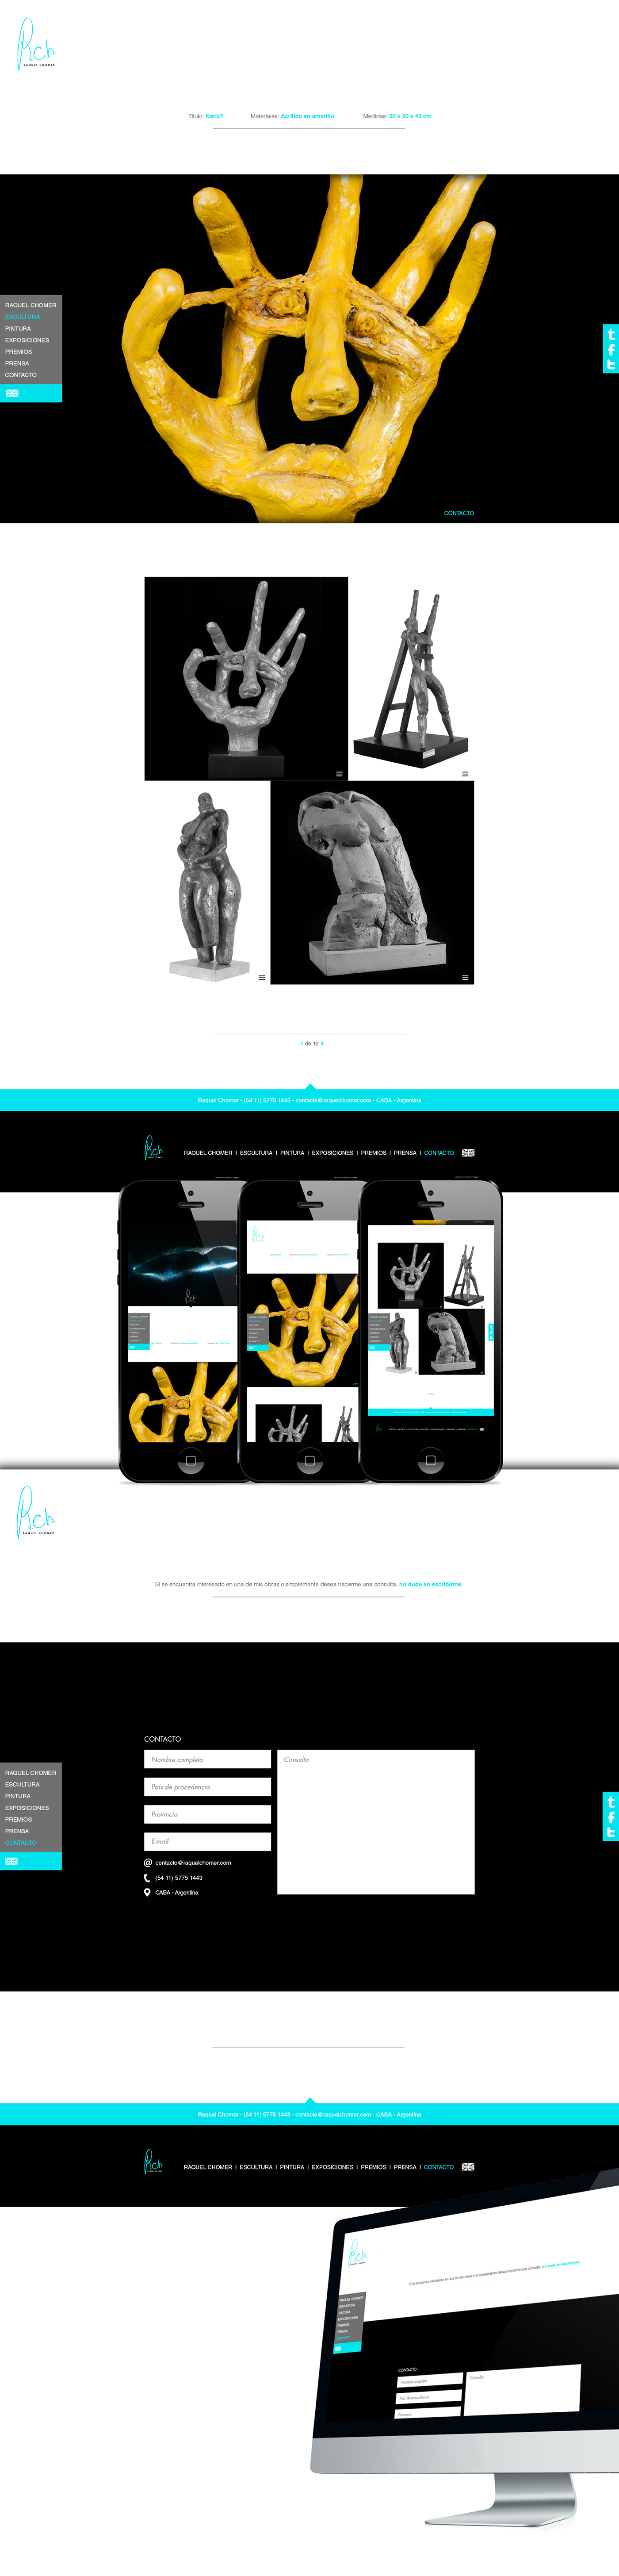 Web design graphicdesign Webdesign 3D piacentino mobile 2D rachelchomer